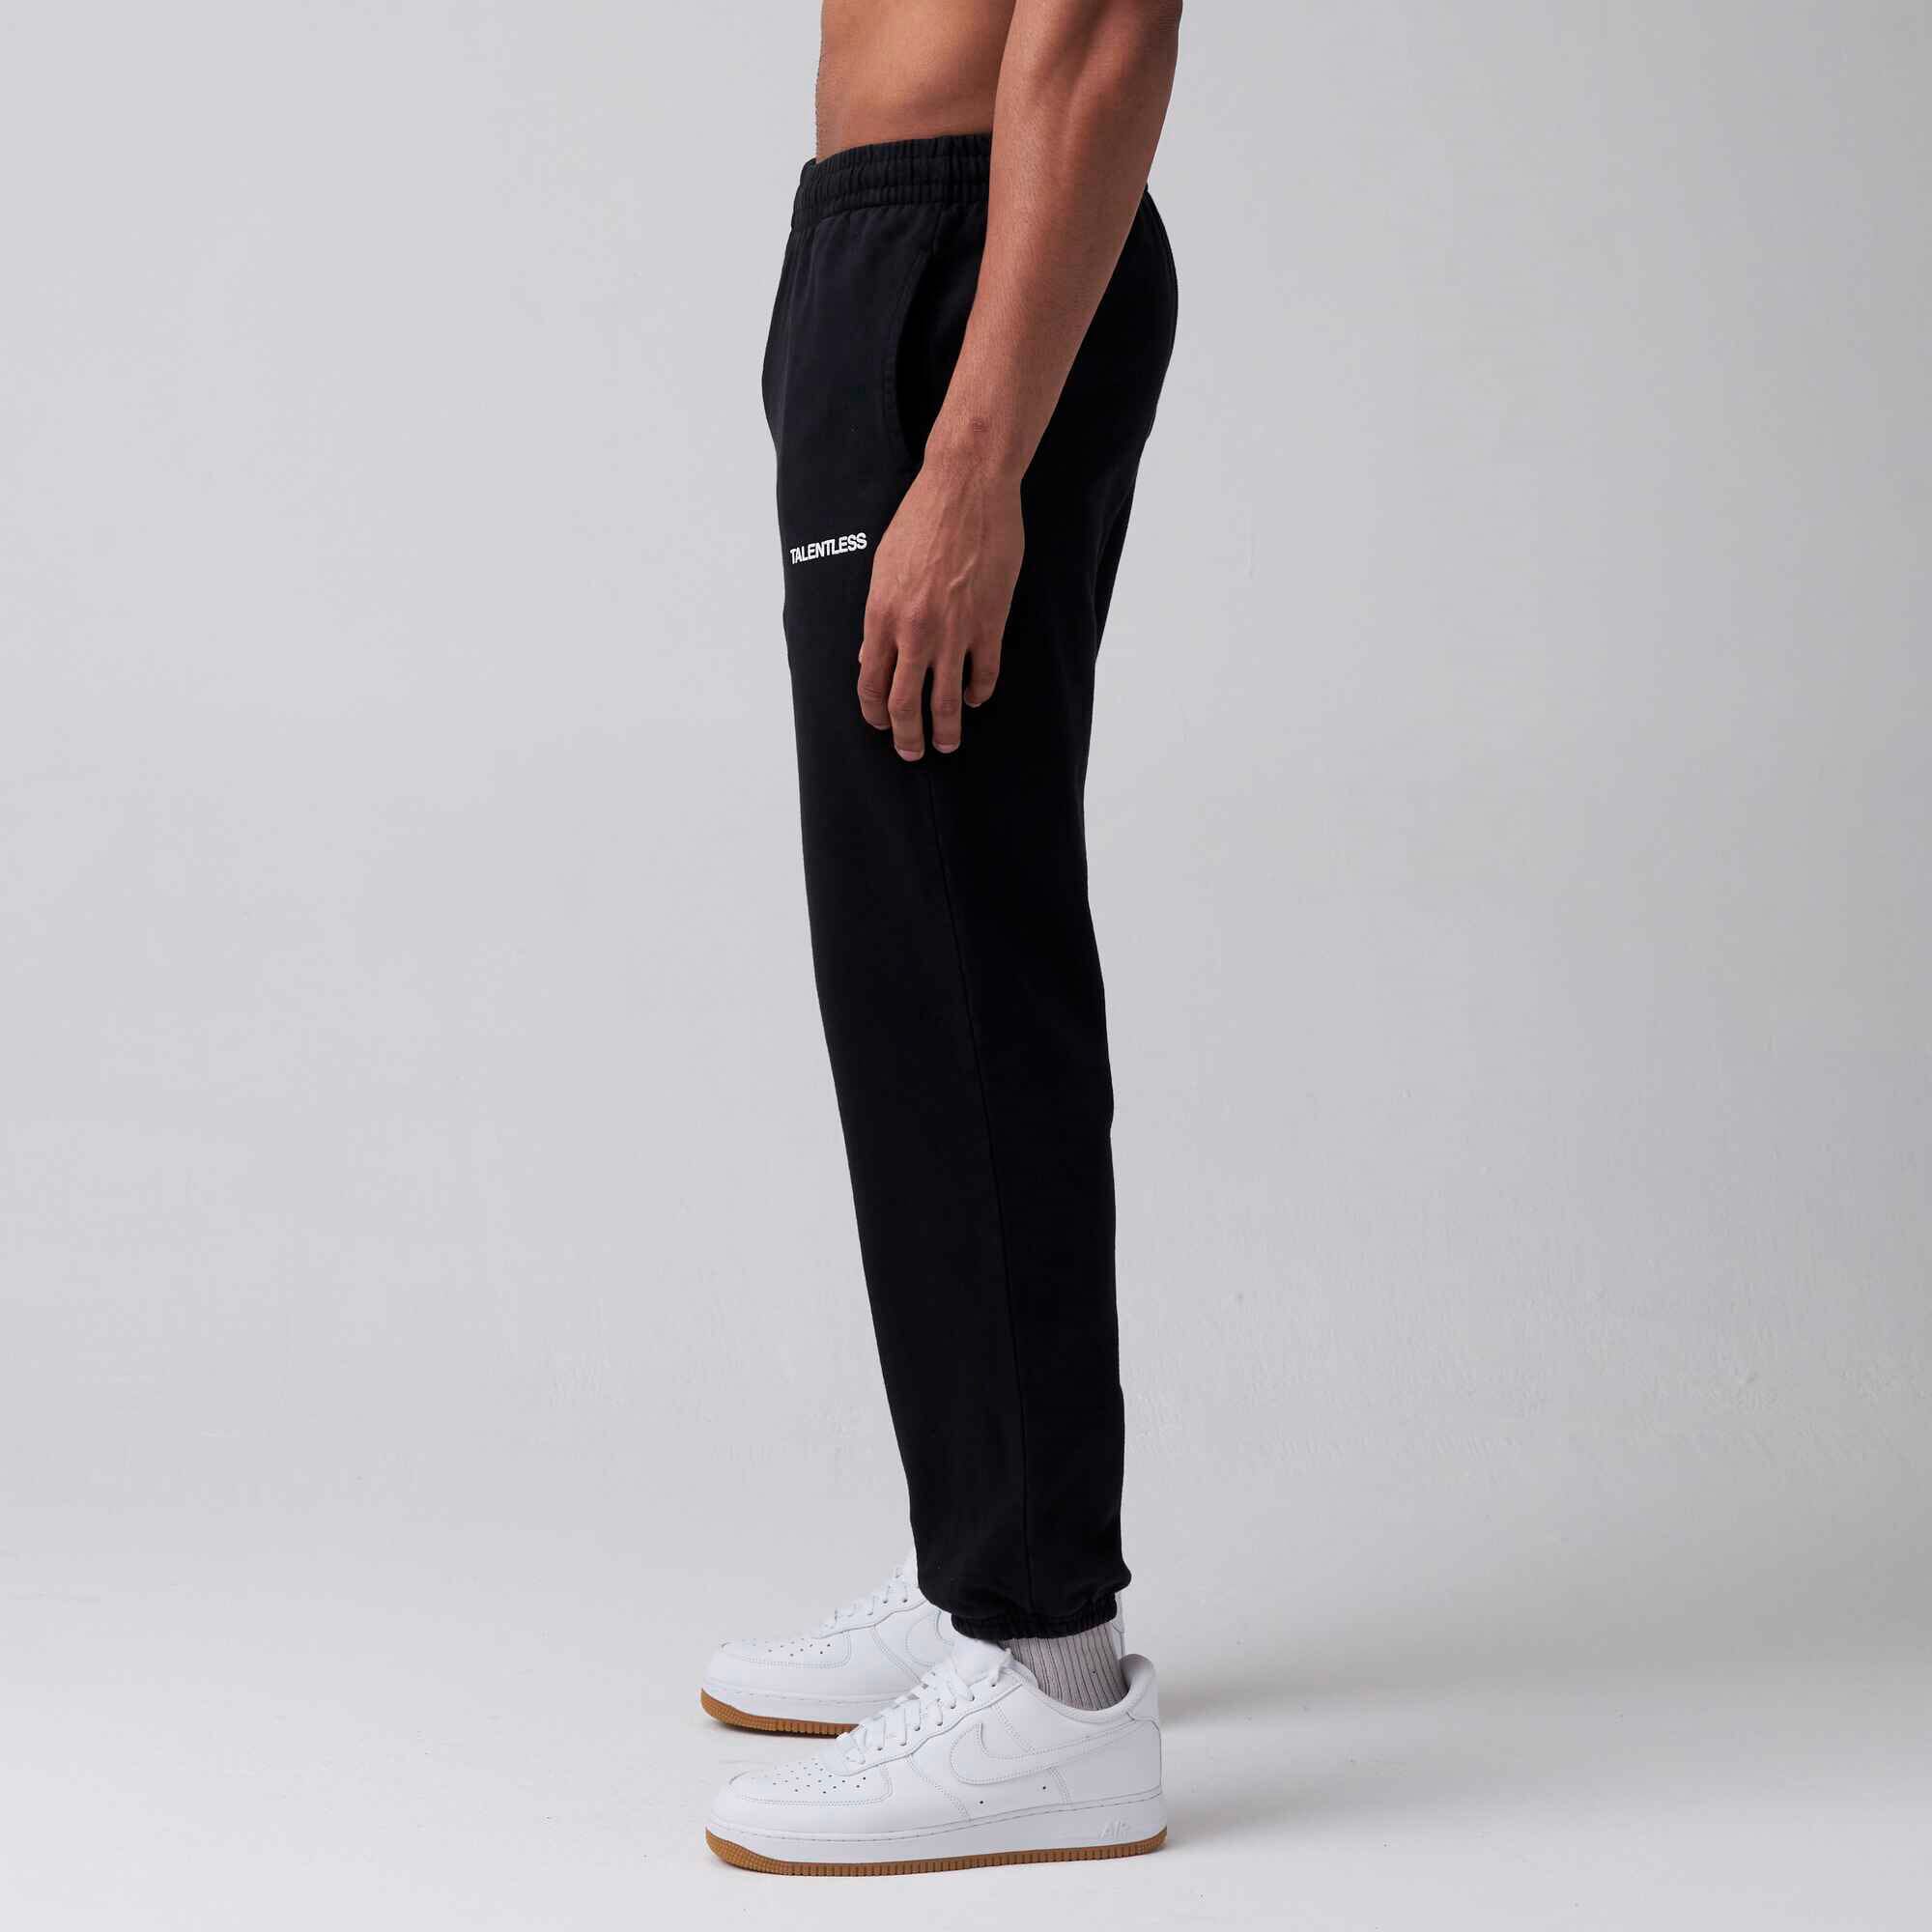 adidas, Yoga Pants Mens, Focus Olive